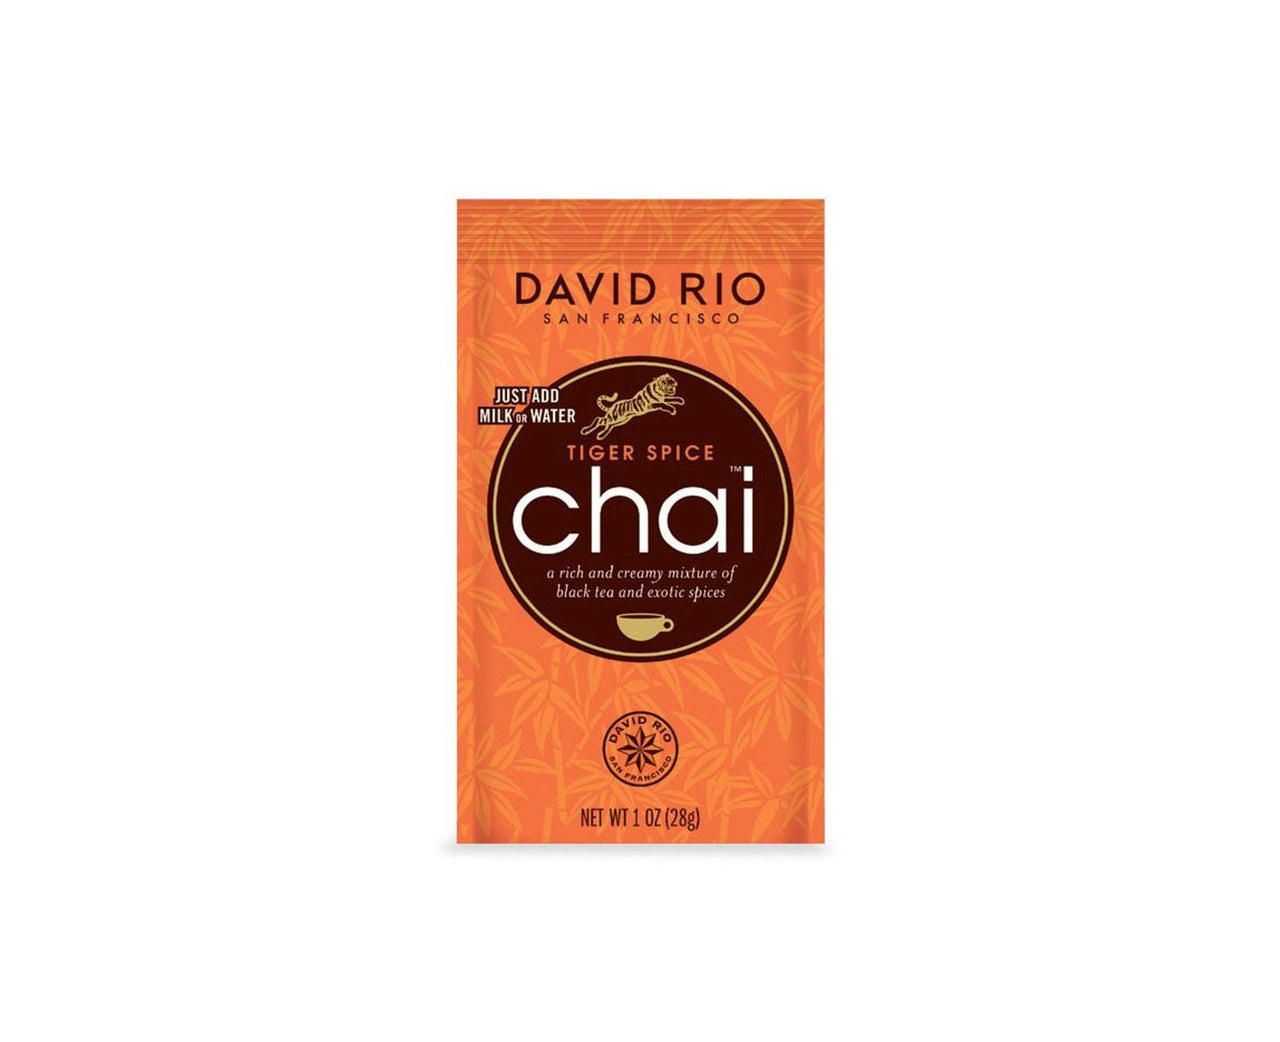 David Rio Chai (Endangered Species) - Single Serve: Tiger Spice 12/Box